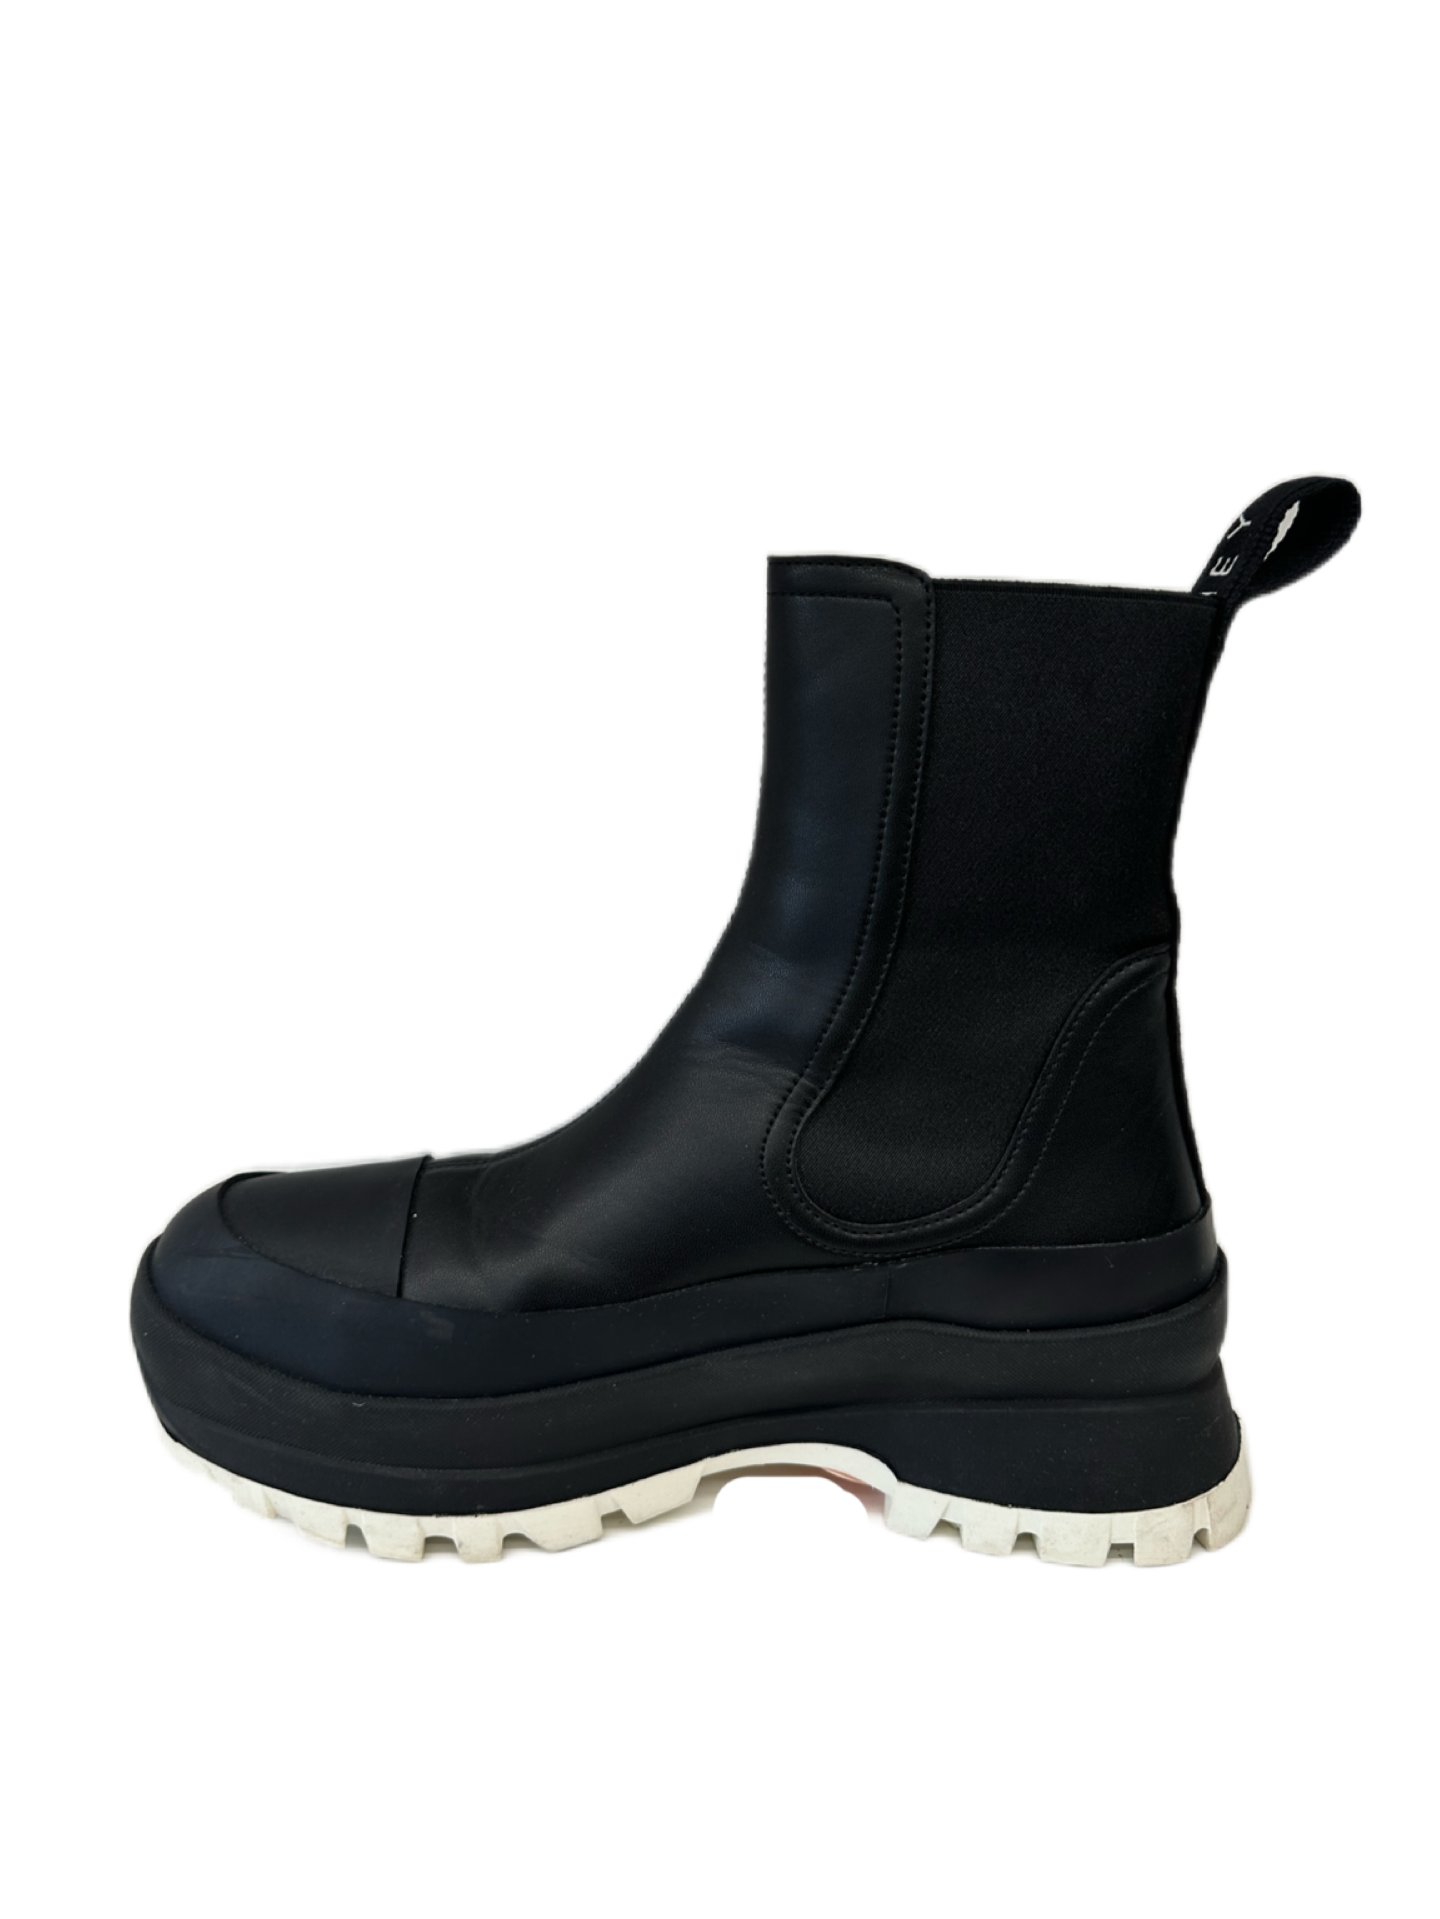 Stella McCartney Black & White Chunky Ankle Boots.  Size: 39